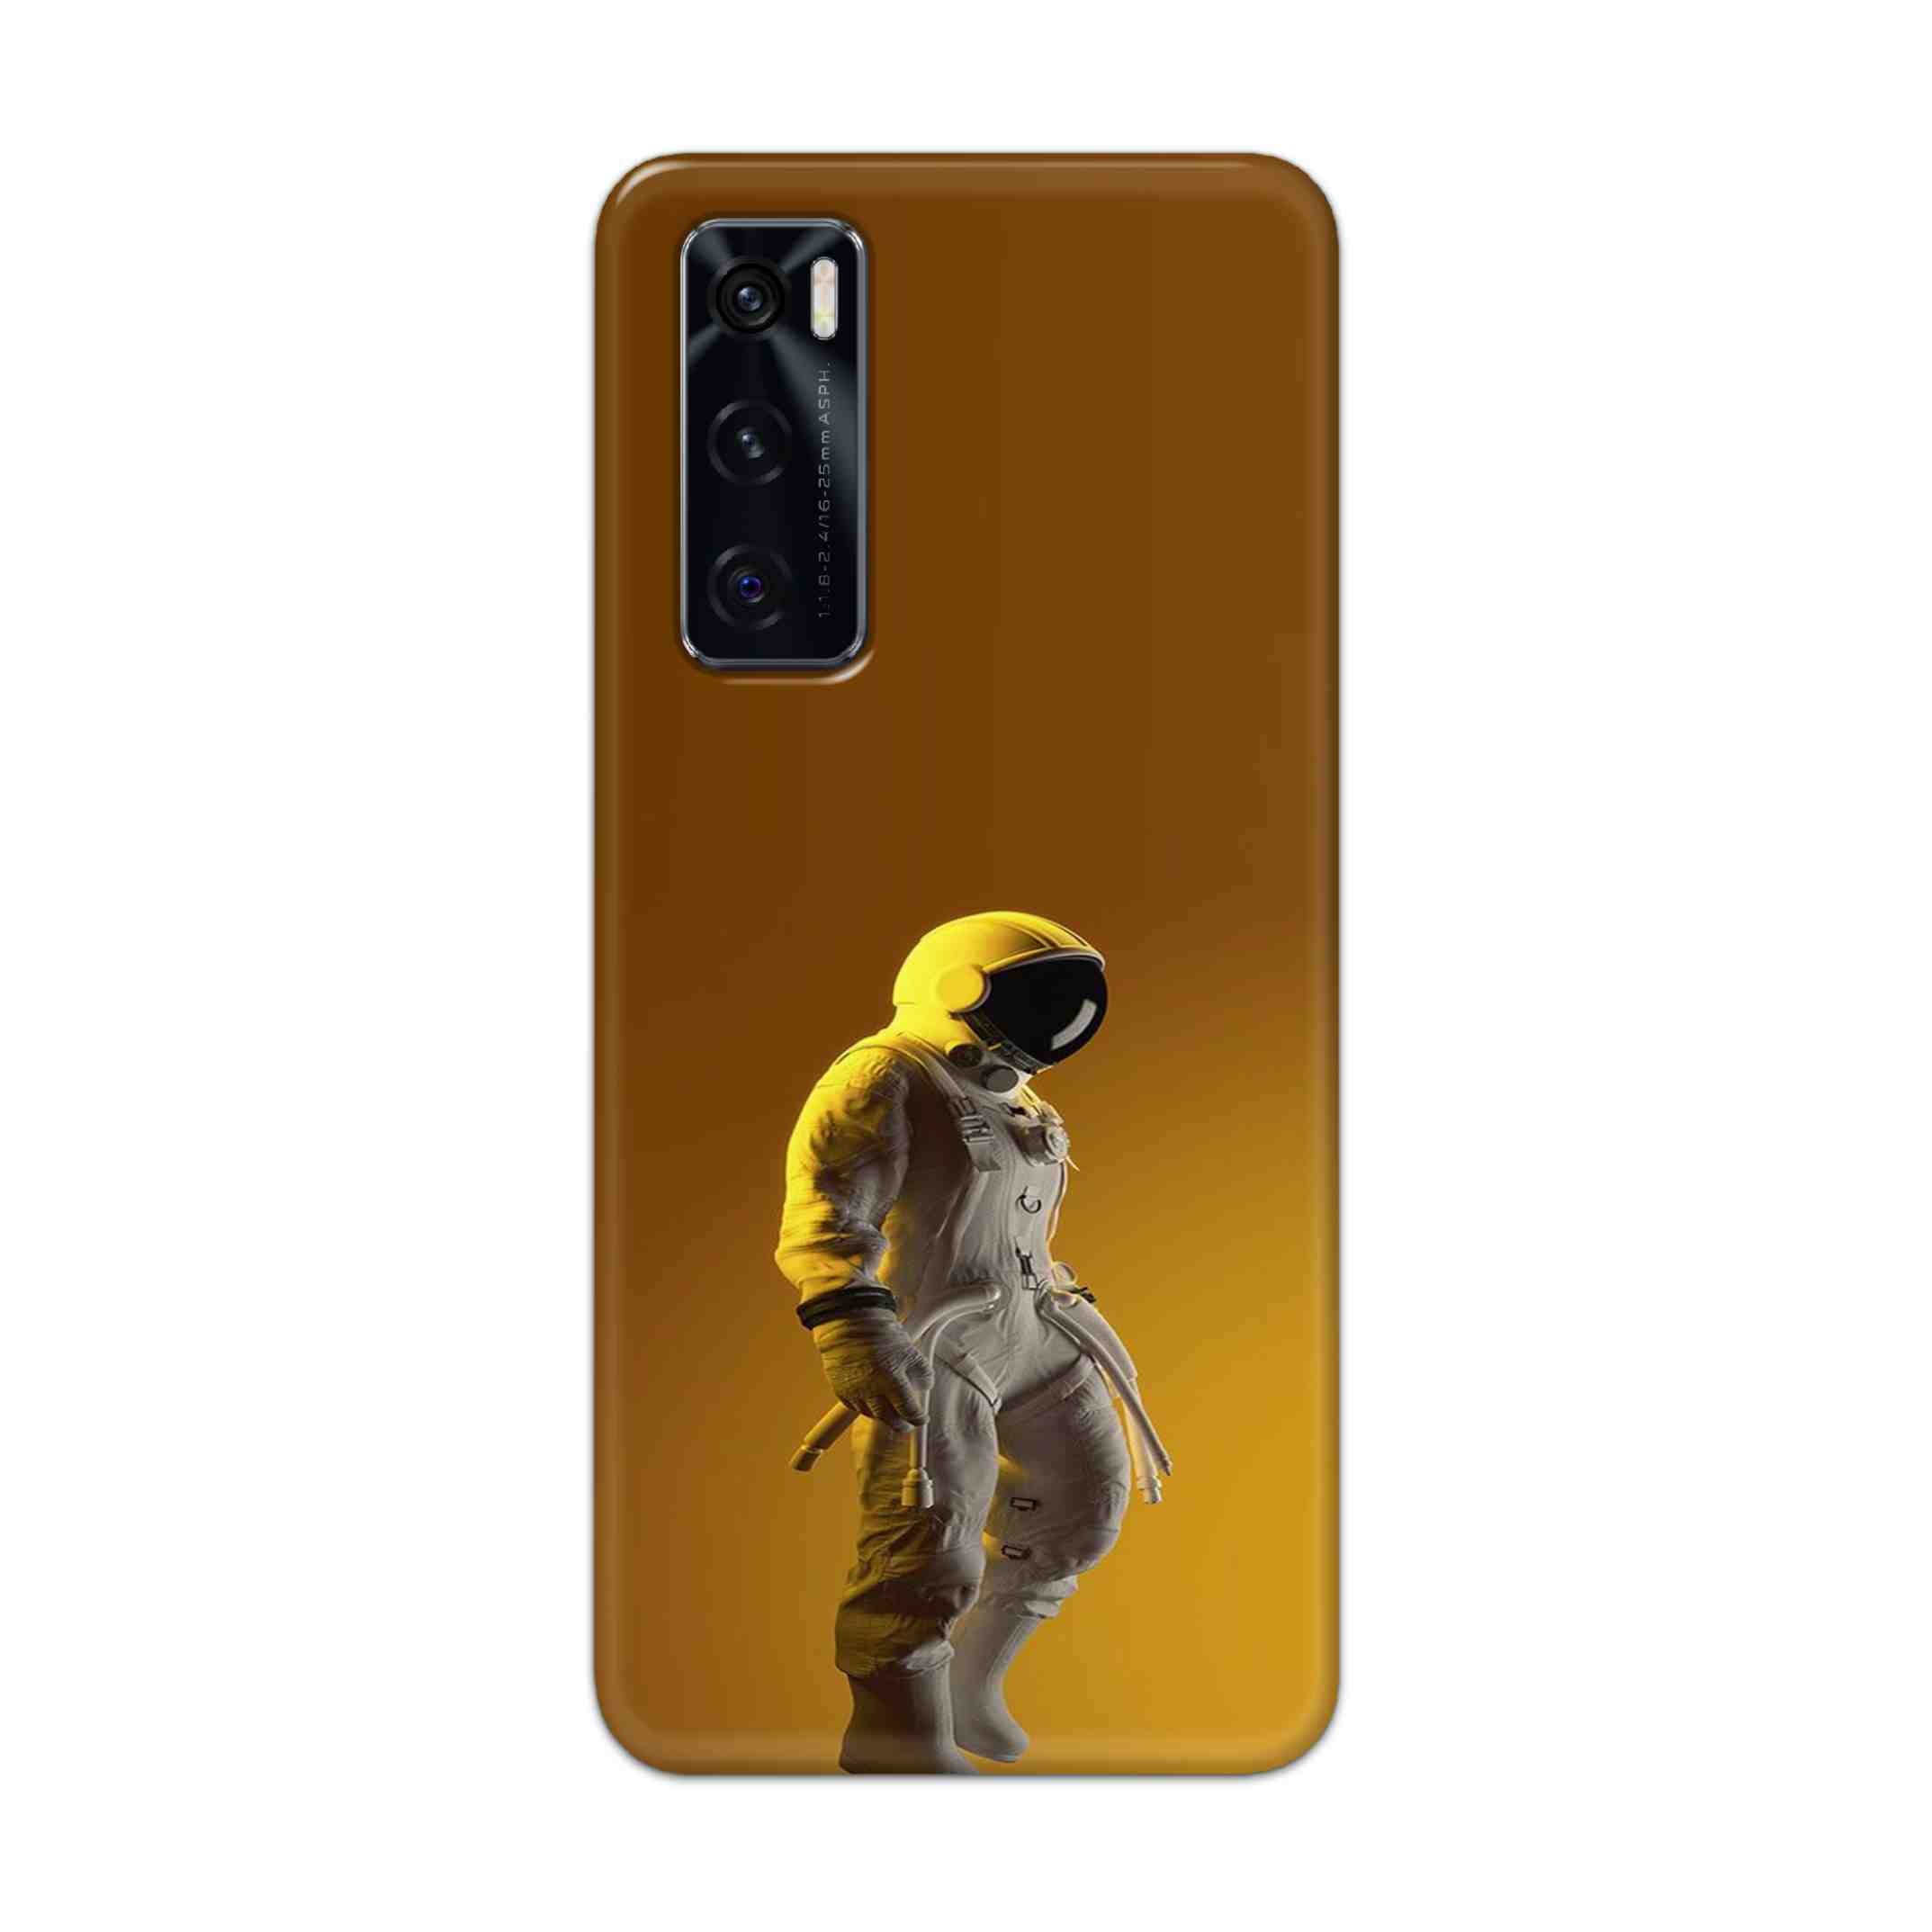 Buy Yellow Astronaut Hard Back Mobile Phone Case Cover For Vivo V20 SE Online